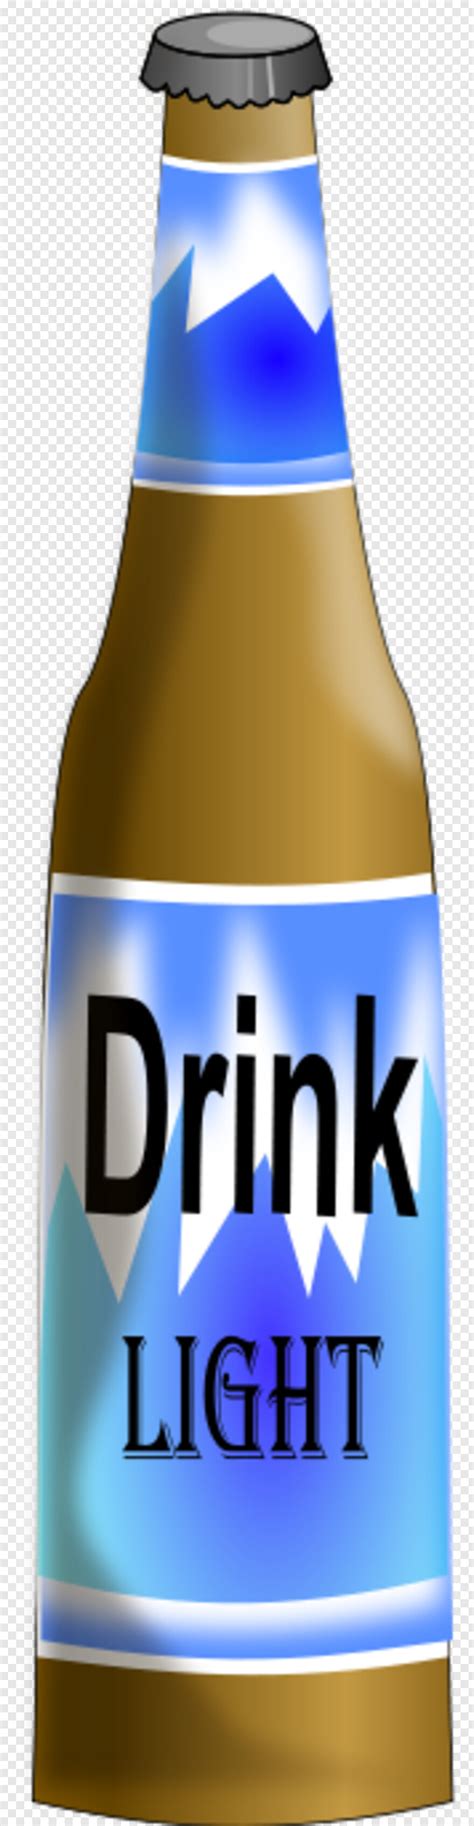 Beer Mug Clip Art, Beer Bottle, Empty Bottle, Alcohol Bottle, Bottle, Beer Bottle Vector #381437 ...